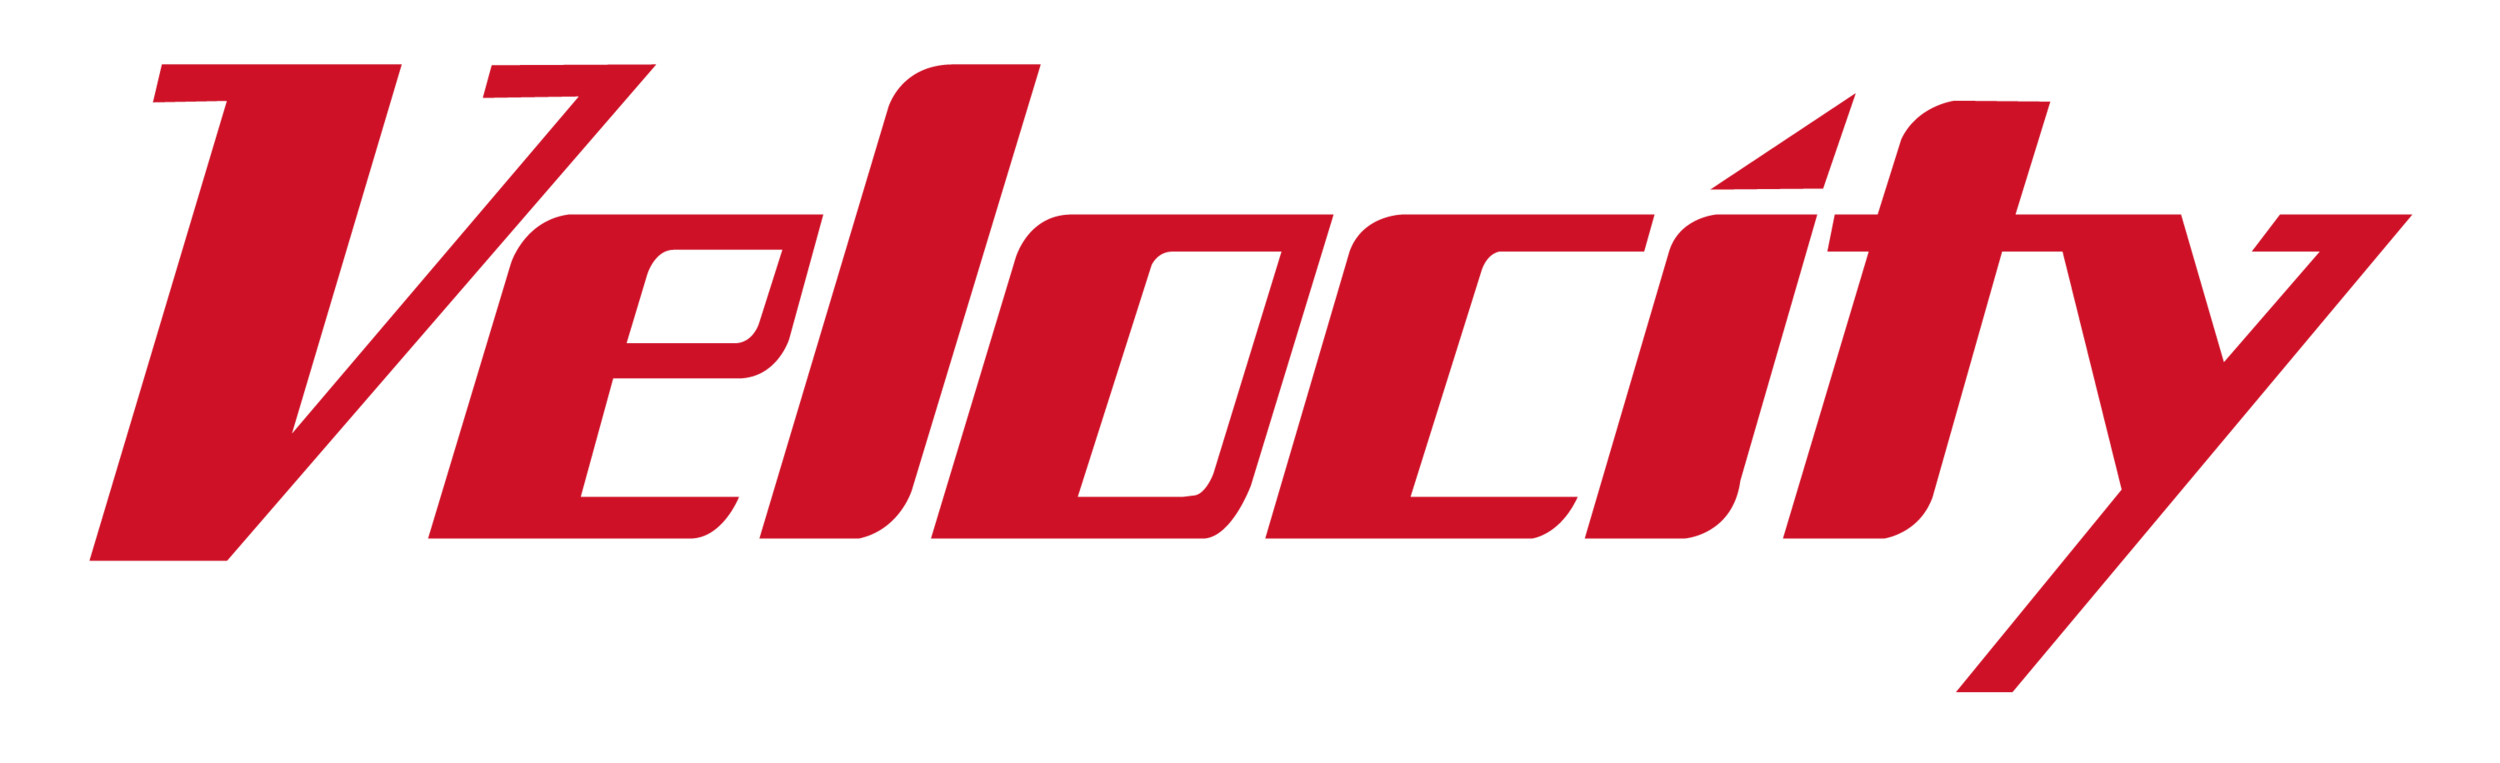 Velocity-Logo.png